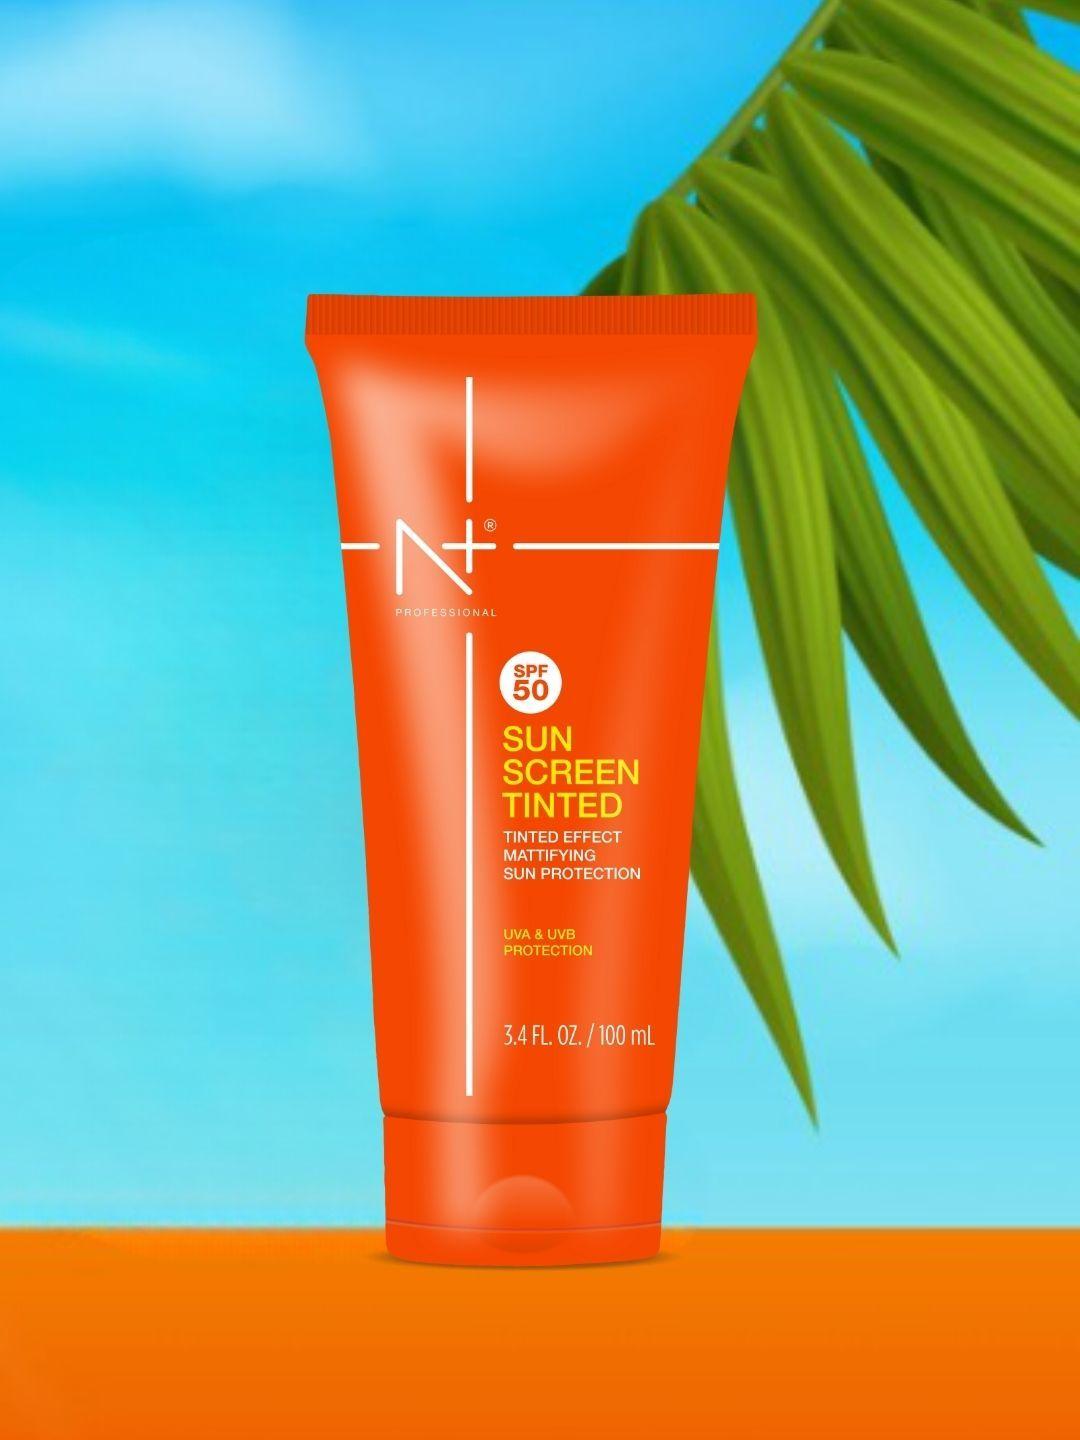 n plus professional spf 50 mattifying sun protection tinted sunscreen - 100 ml